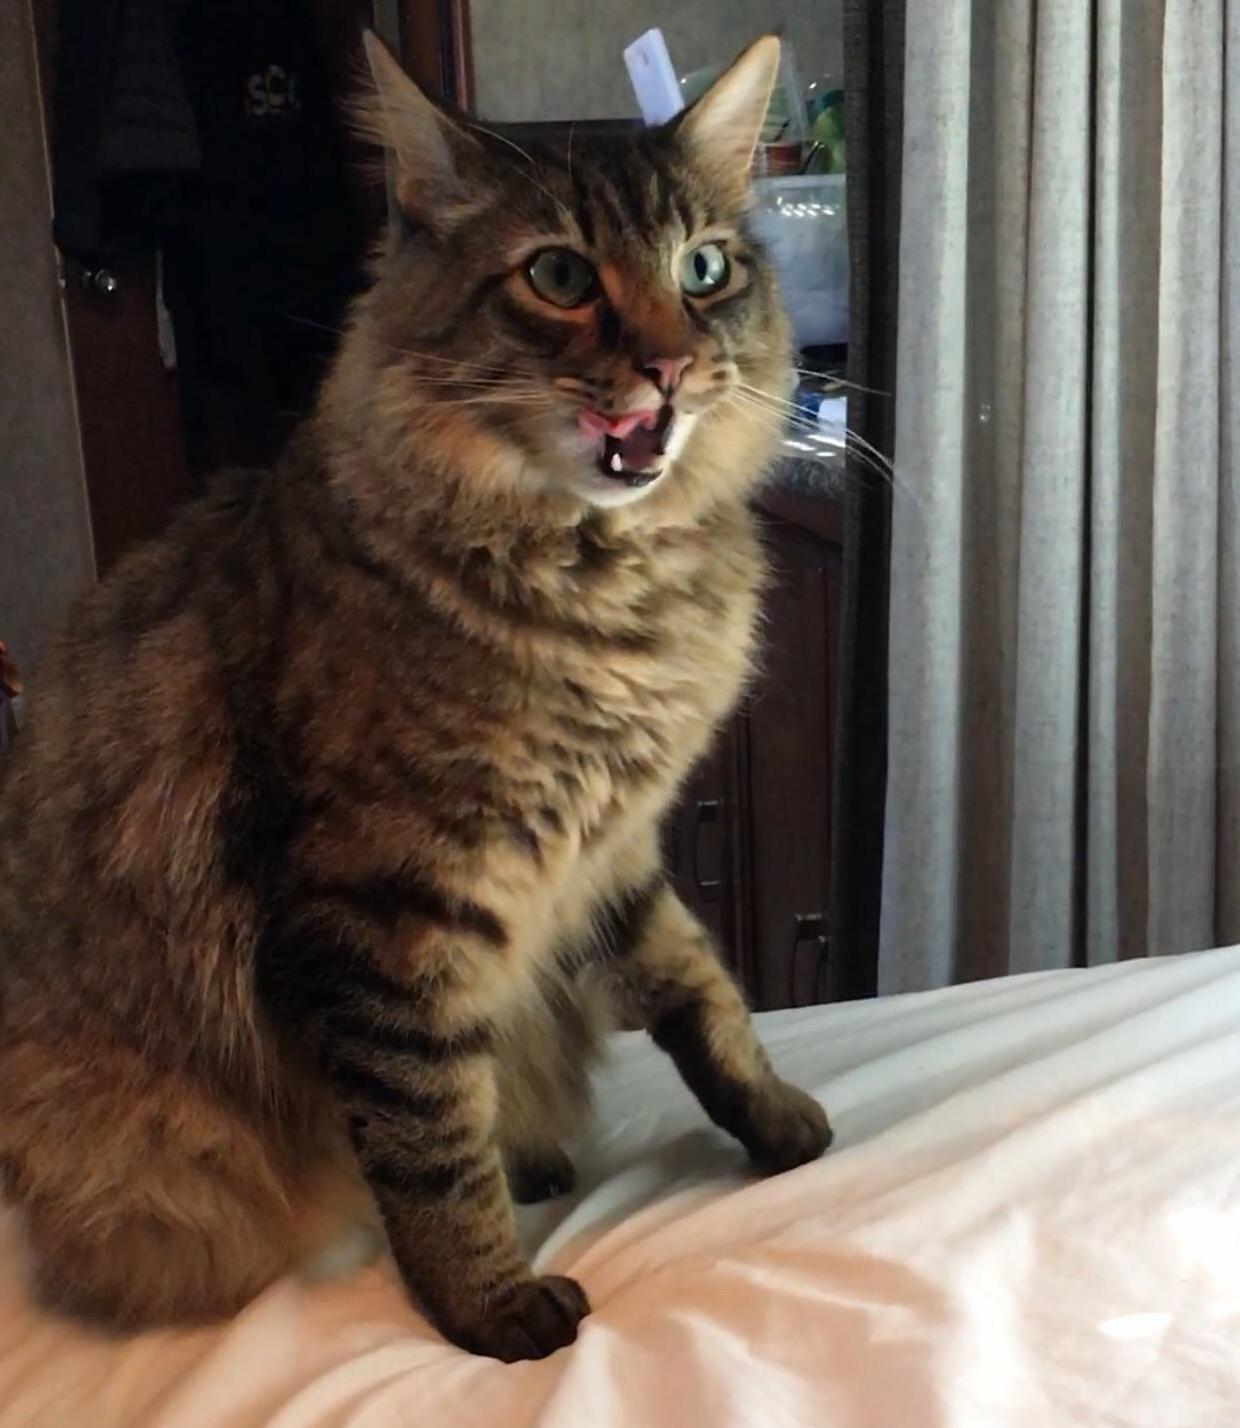 Gigis reaction to the word tuna.